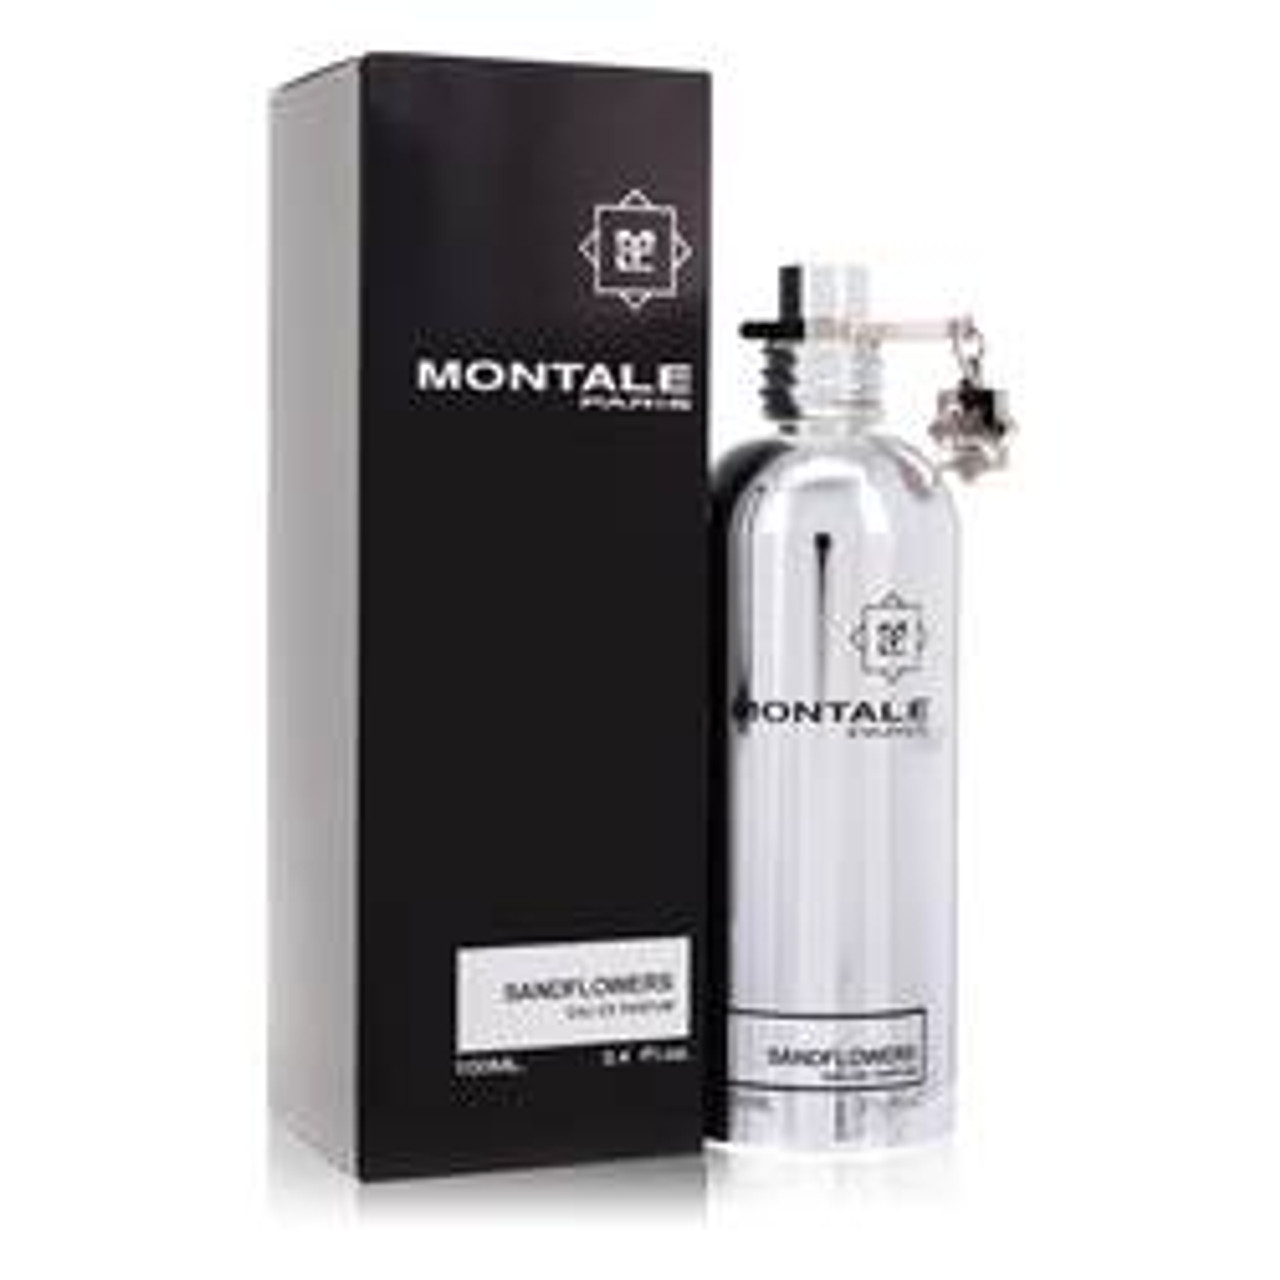 Montale Sandflowers Perfume By Montale Eau De Parfum Spray 3.3 oz for Women - *Pre-Order